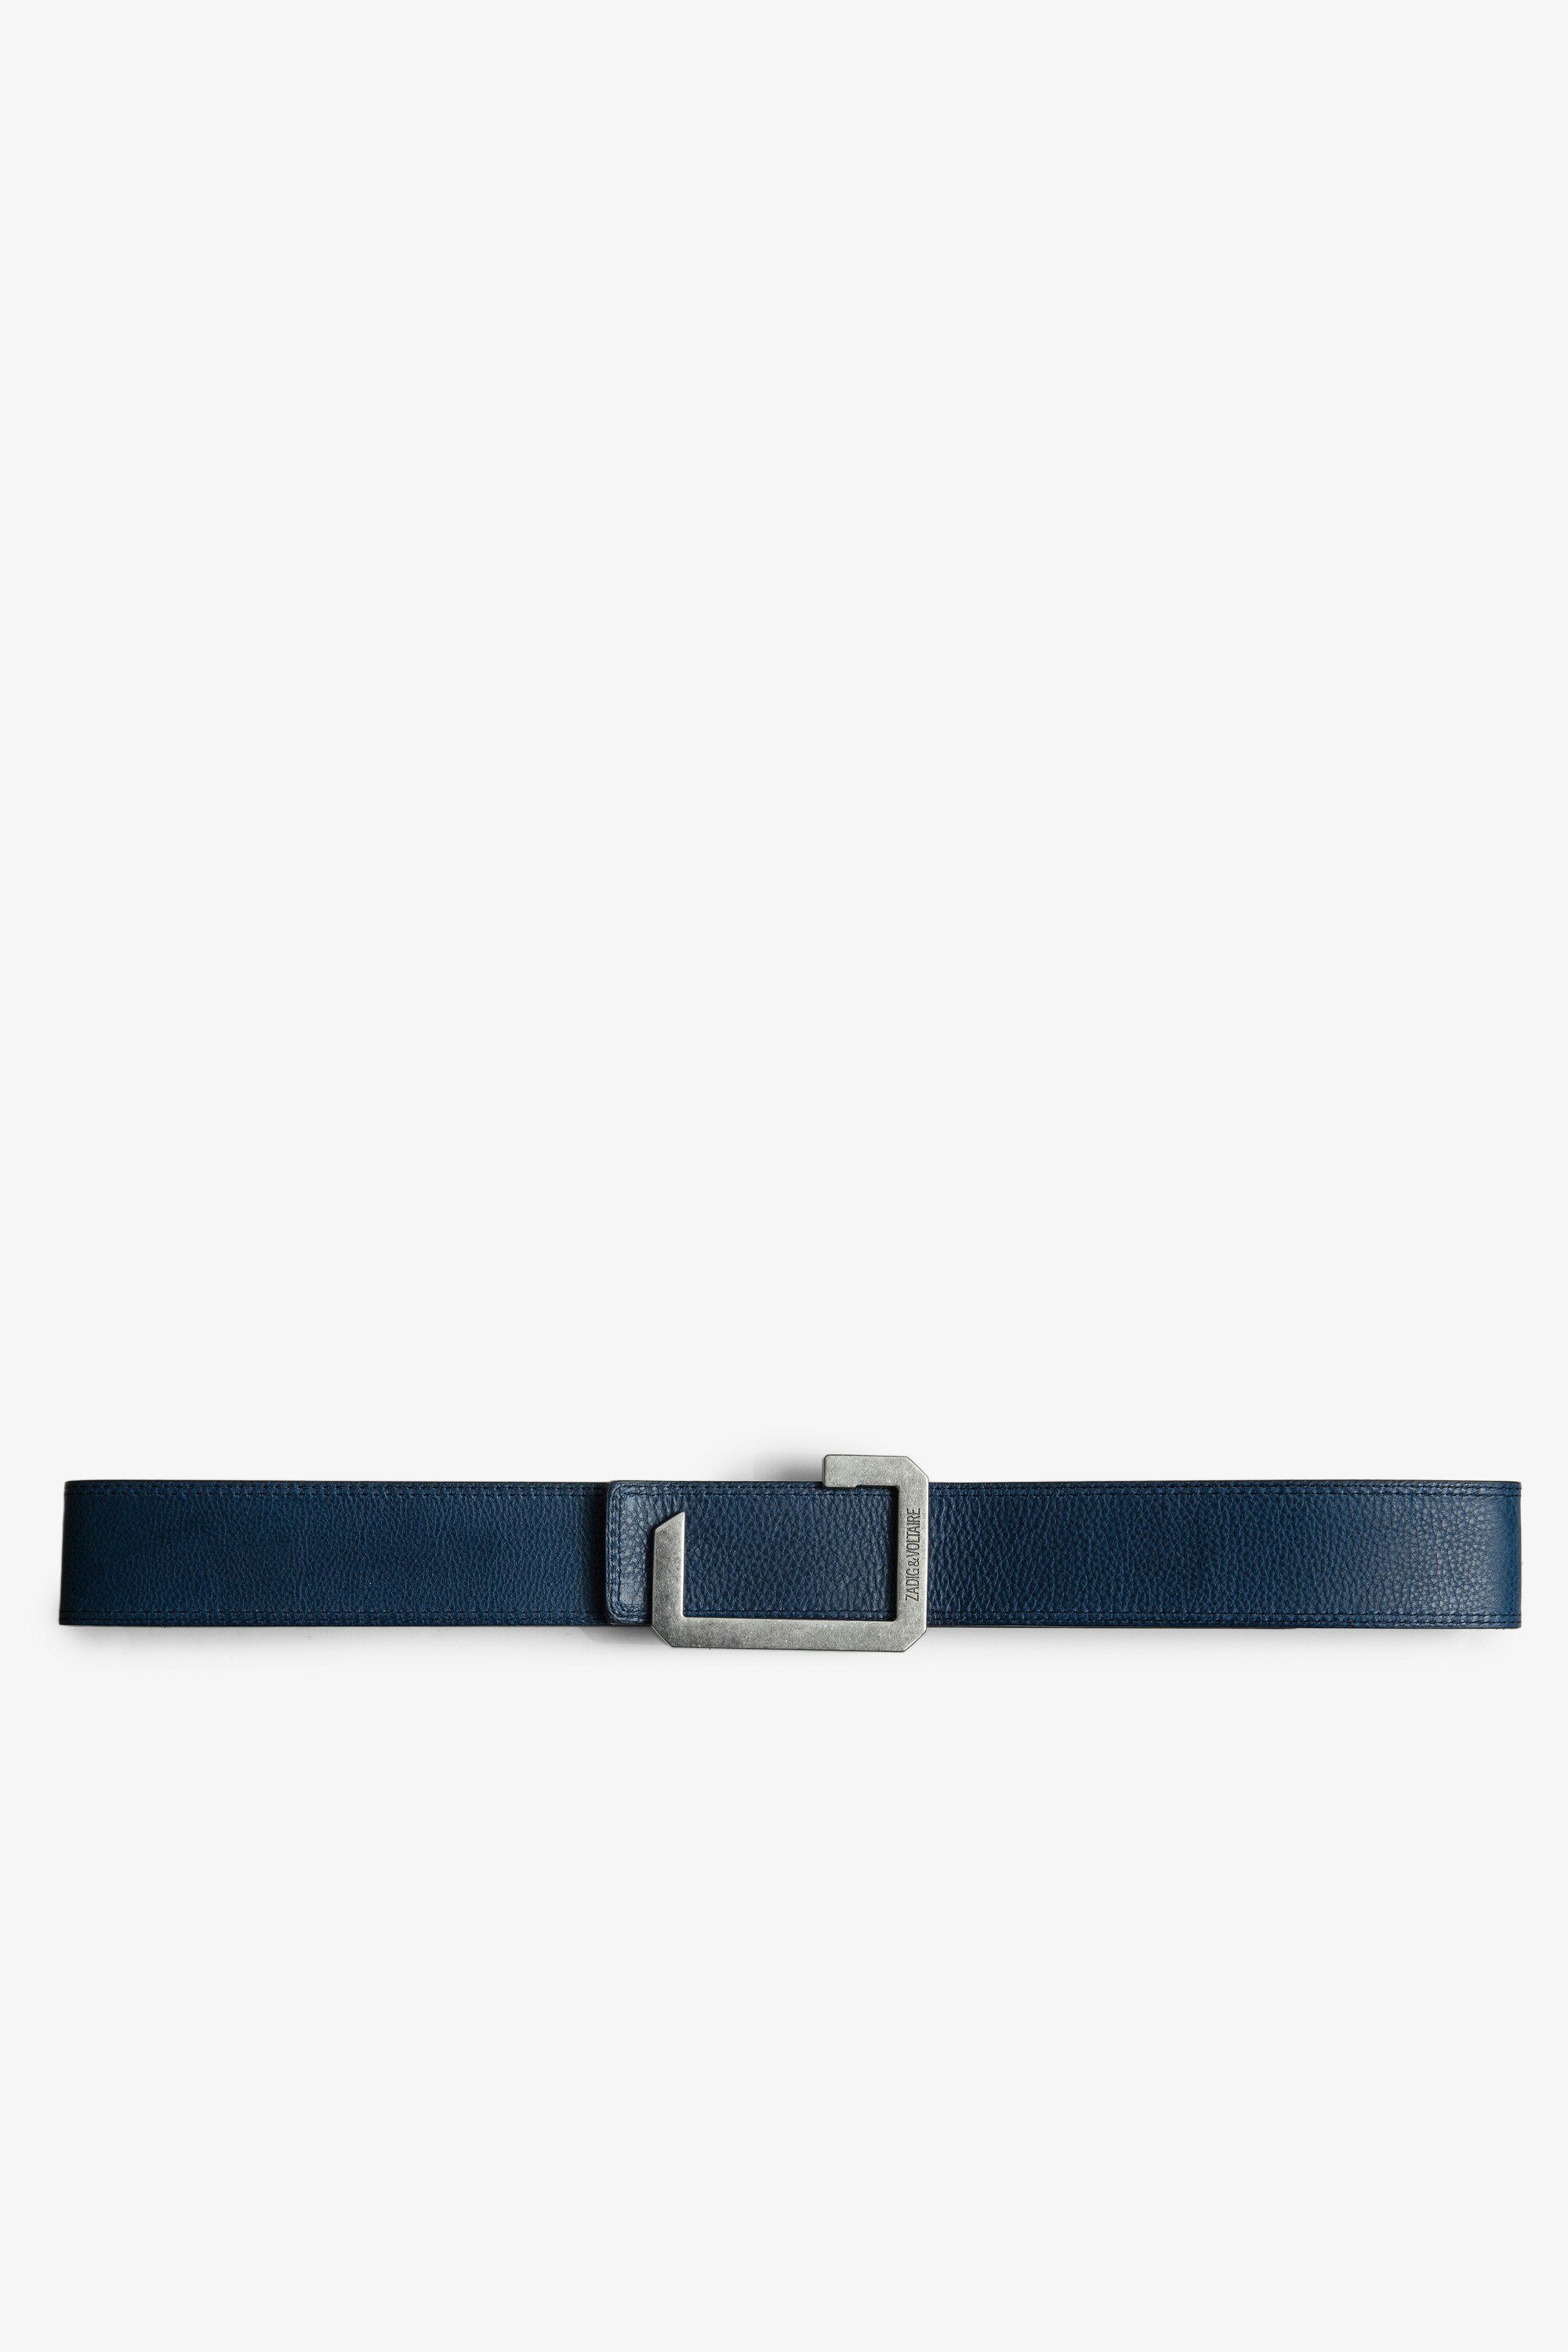 The Reversible レザーベルト Men's reversible leather belt